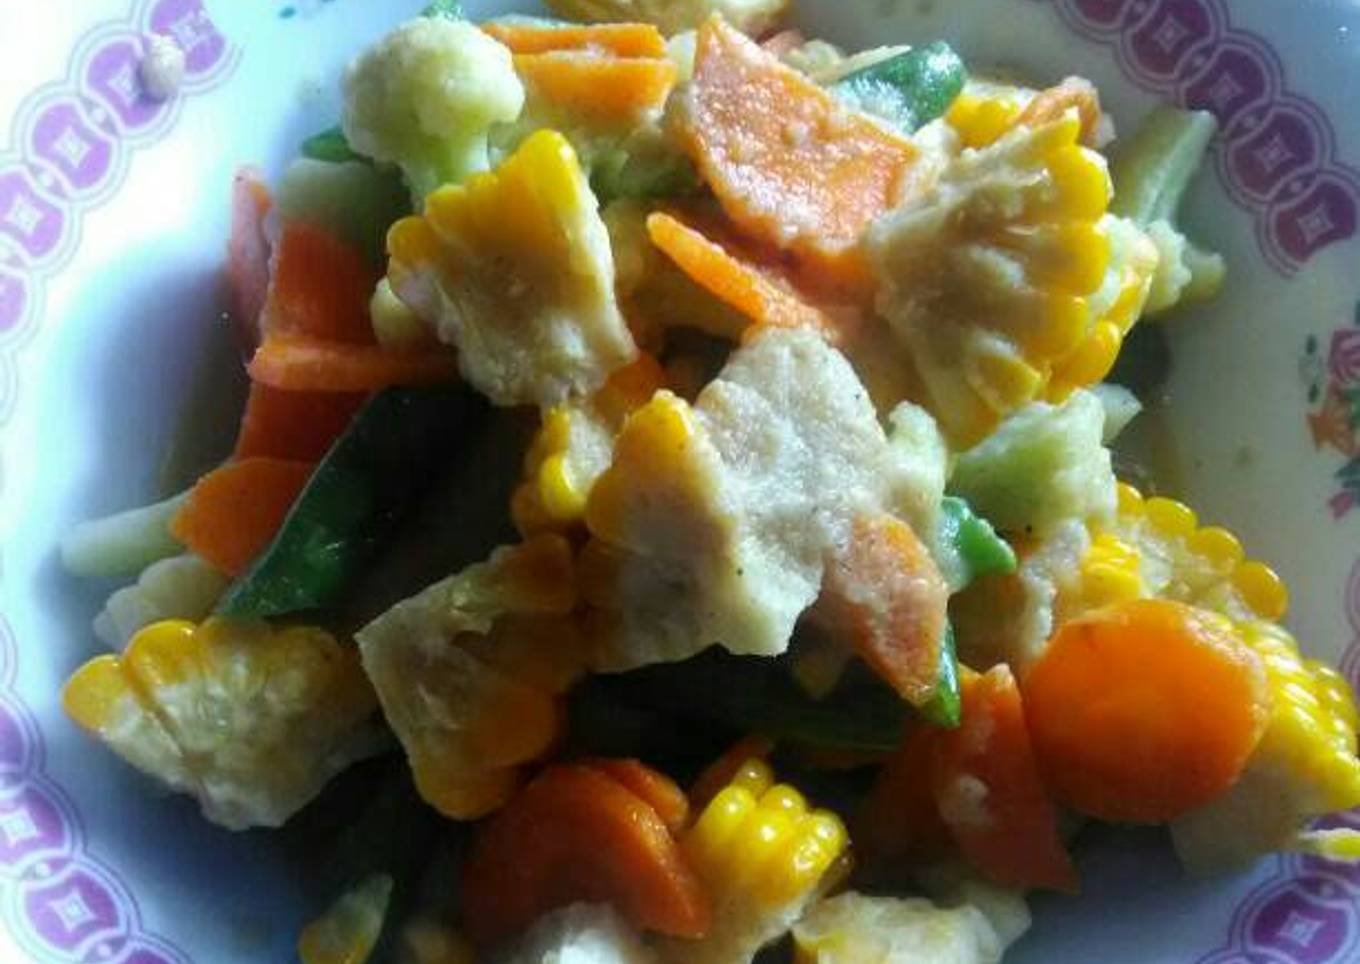 Capcay simple mix sayuran - resep kuliner nusantara